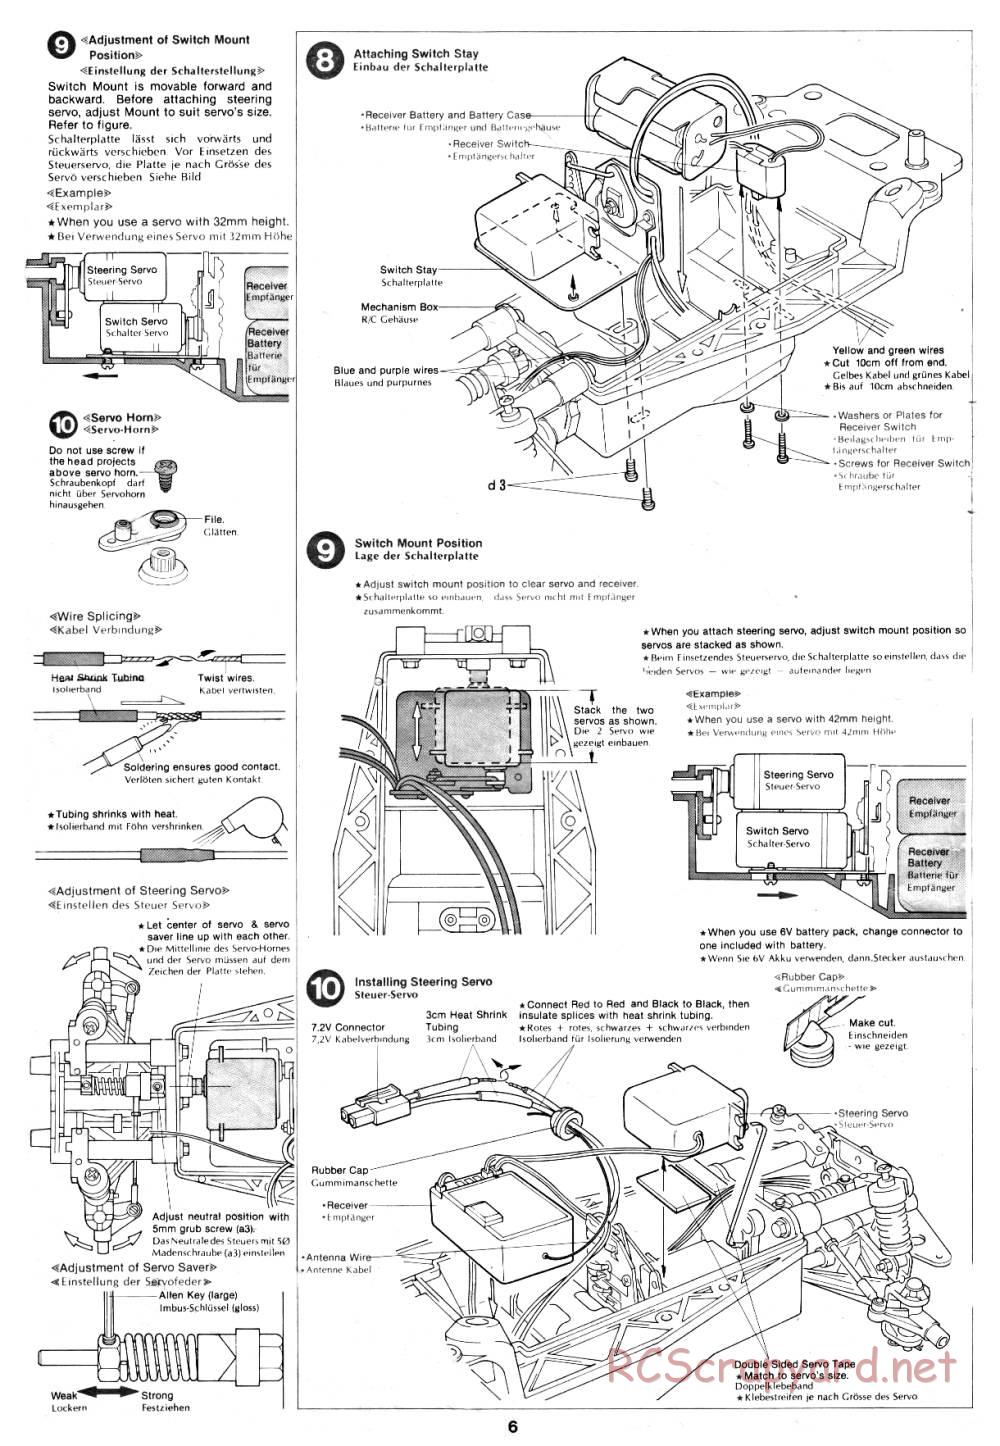 Tamiya - Audi Quattro Rally - 58036 - Manual - Page 6